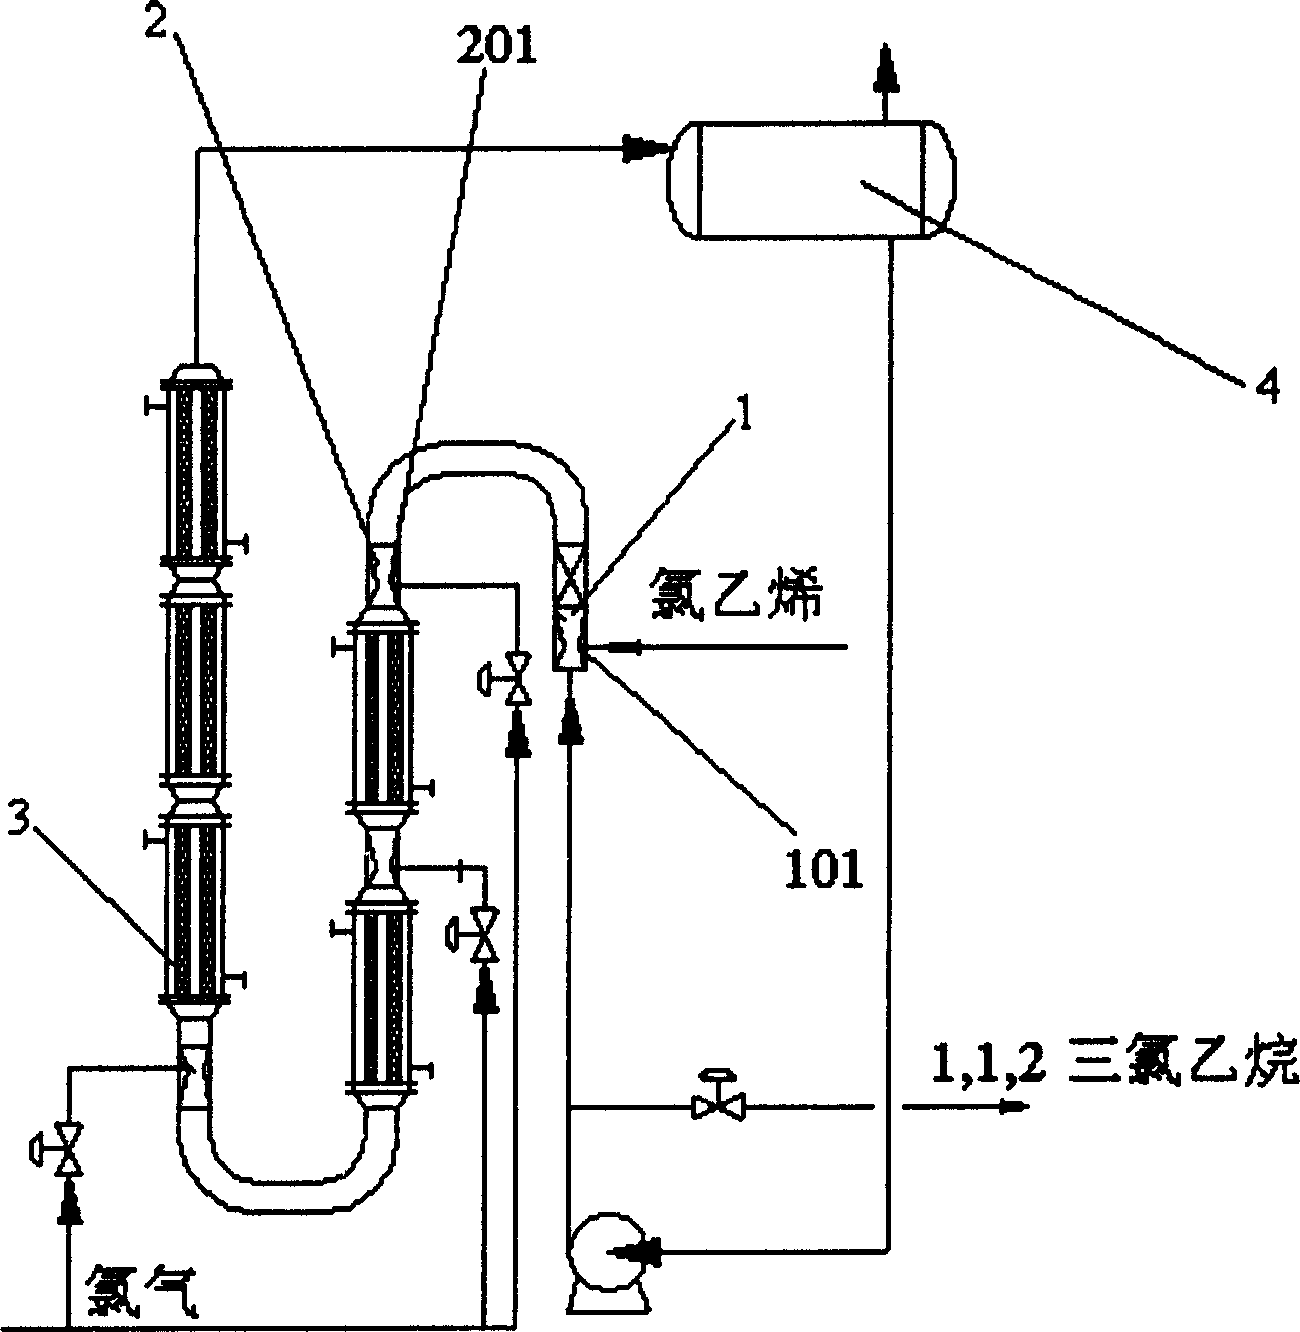 Process for preparing 1,1,2 trichloroethylane